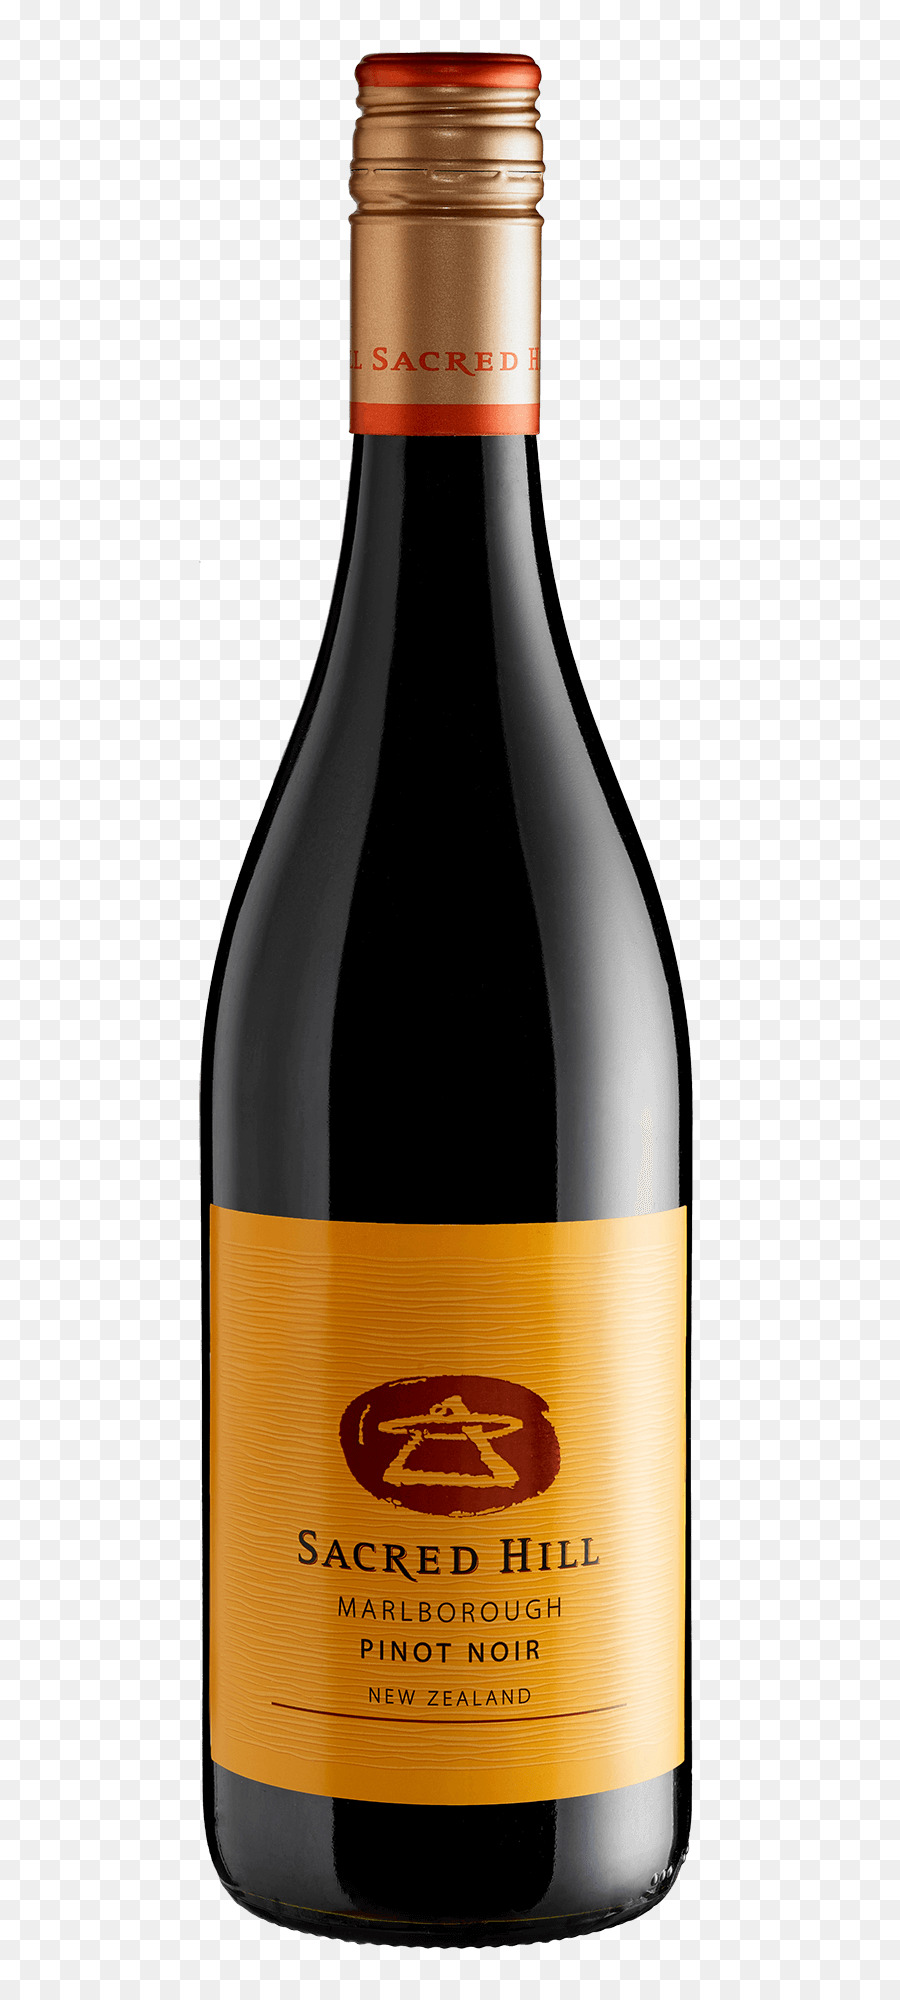 Vino Pinot noir, Cabernet Sauvignon Marlborough Pinot gris - vino